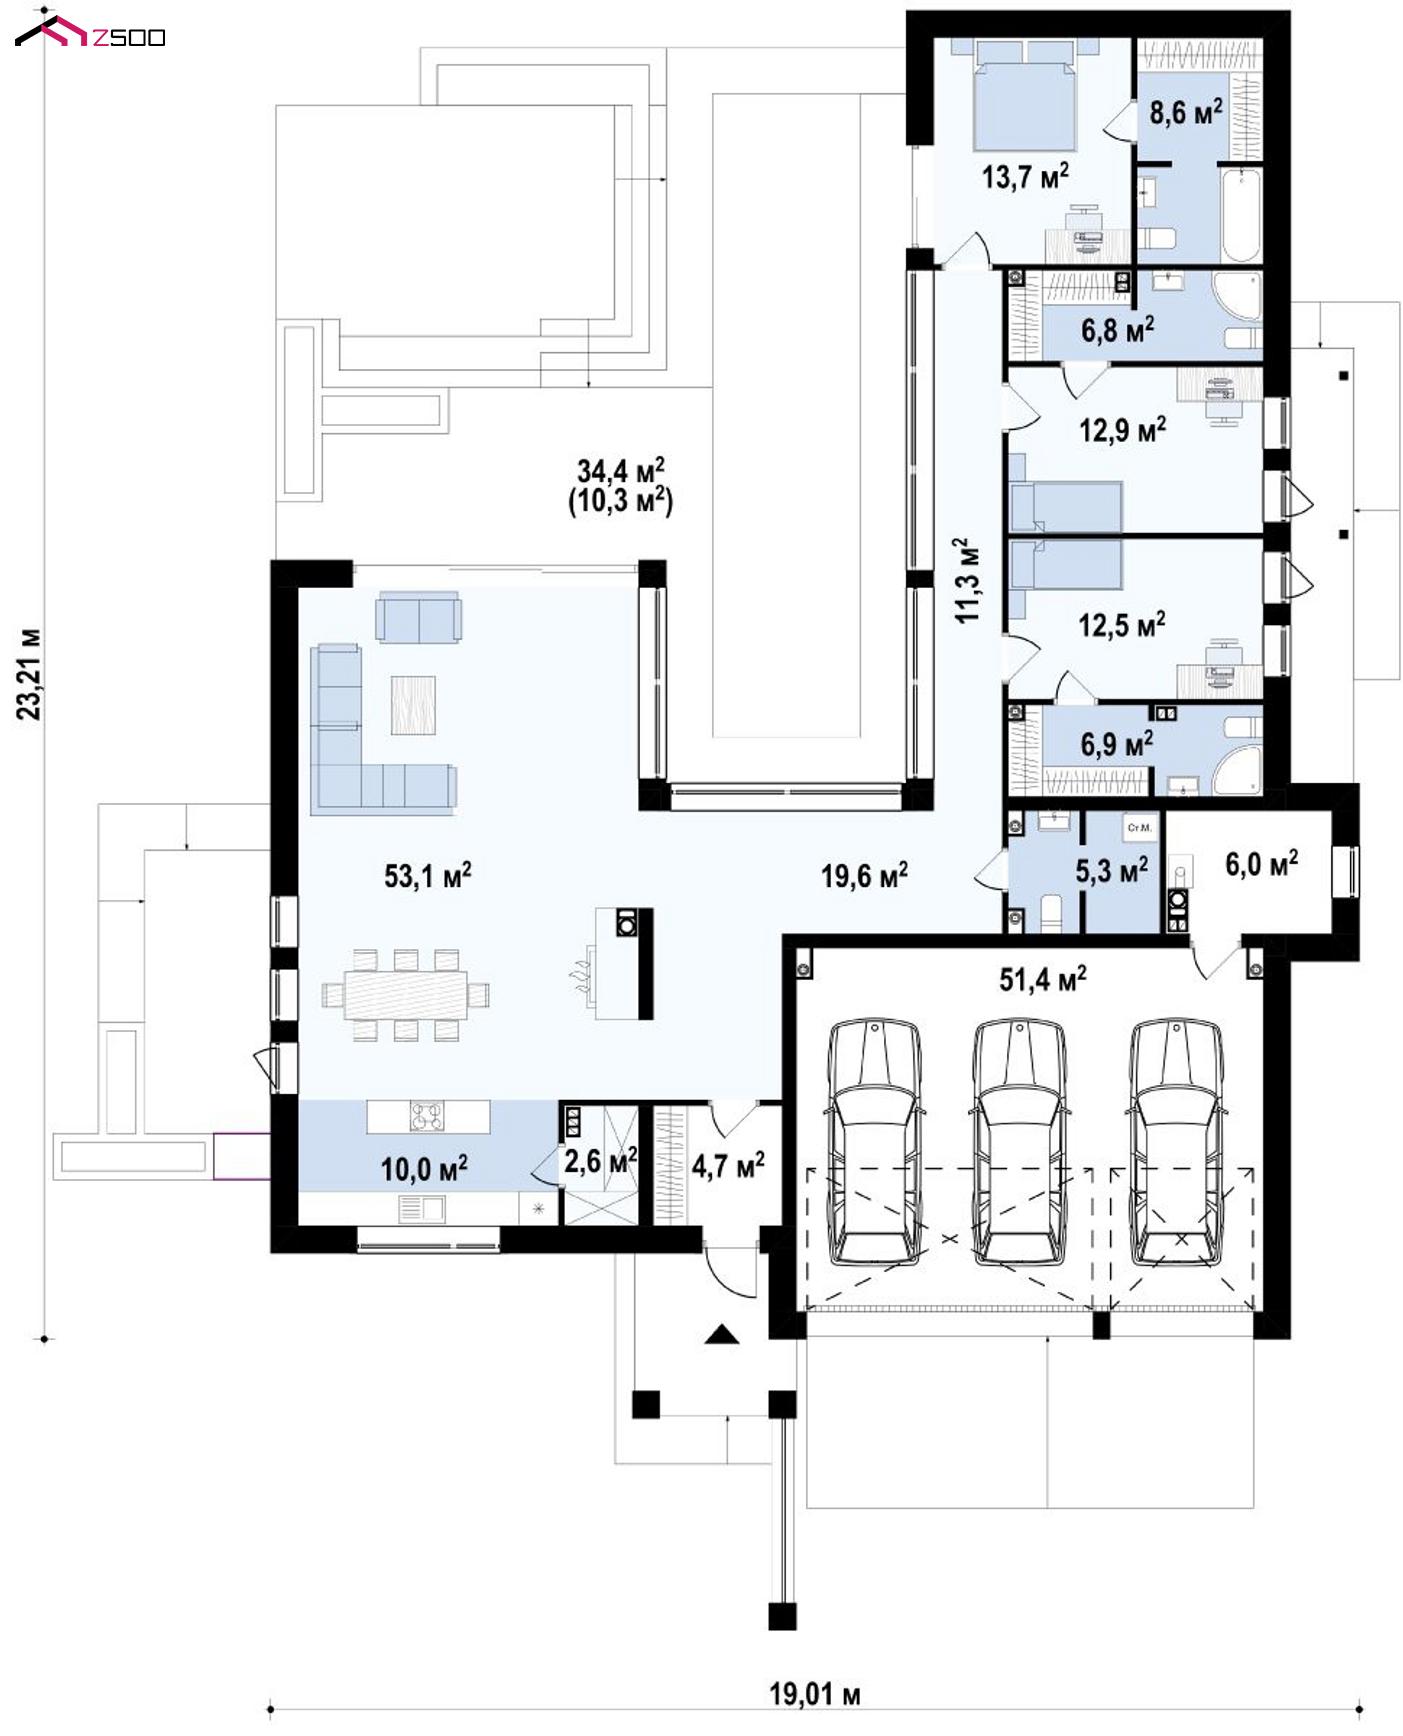 1-ый этаж - план проекта Zx99